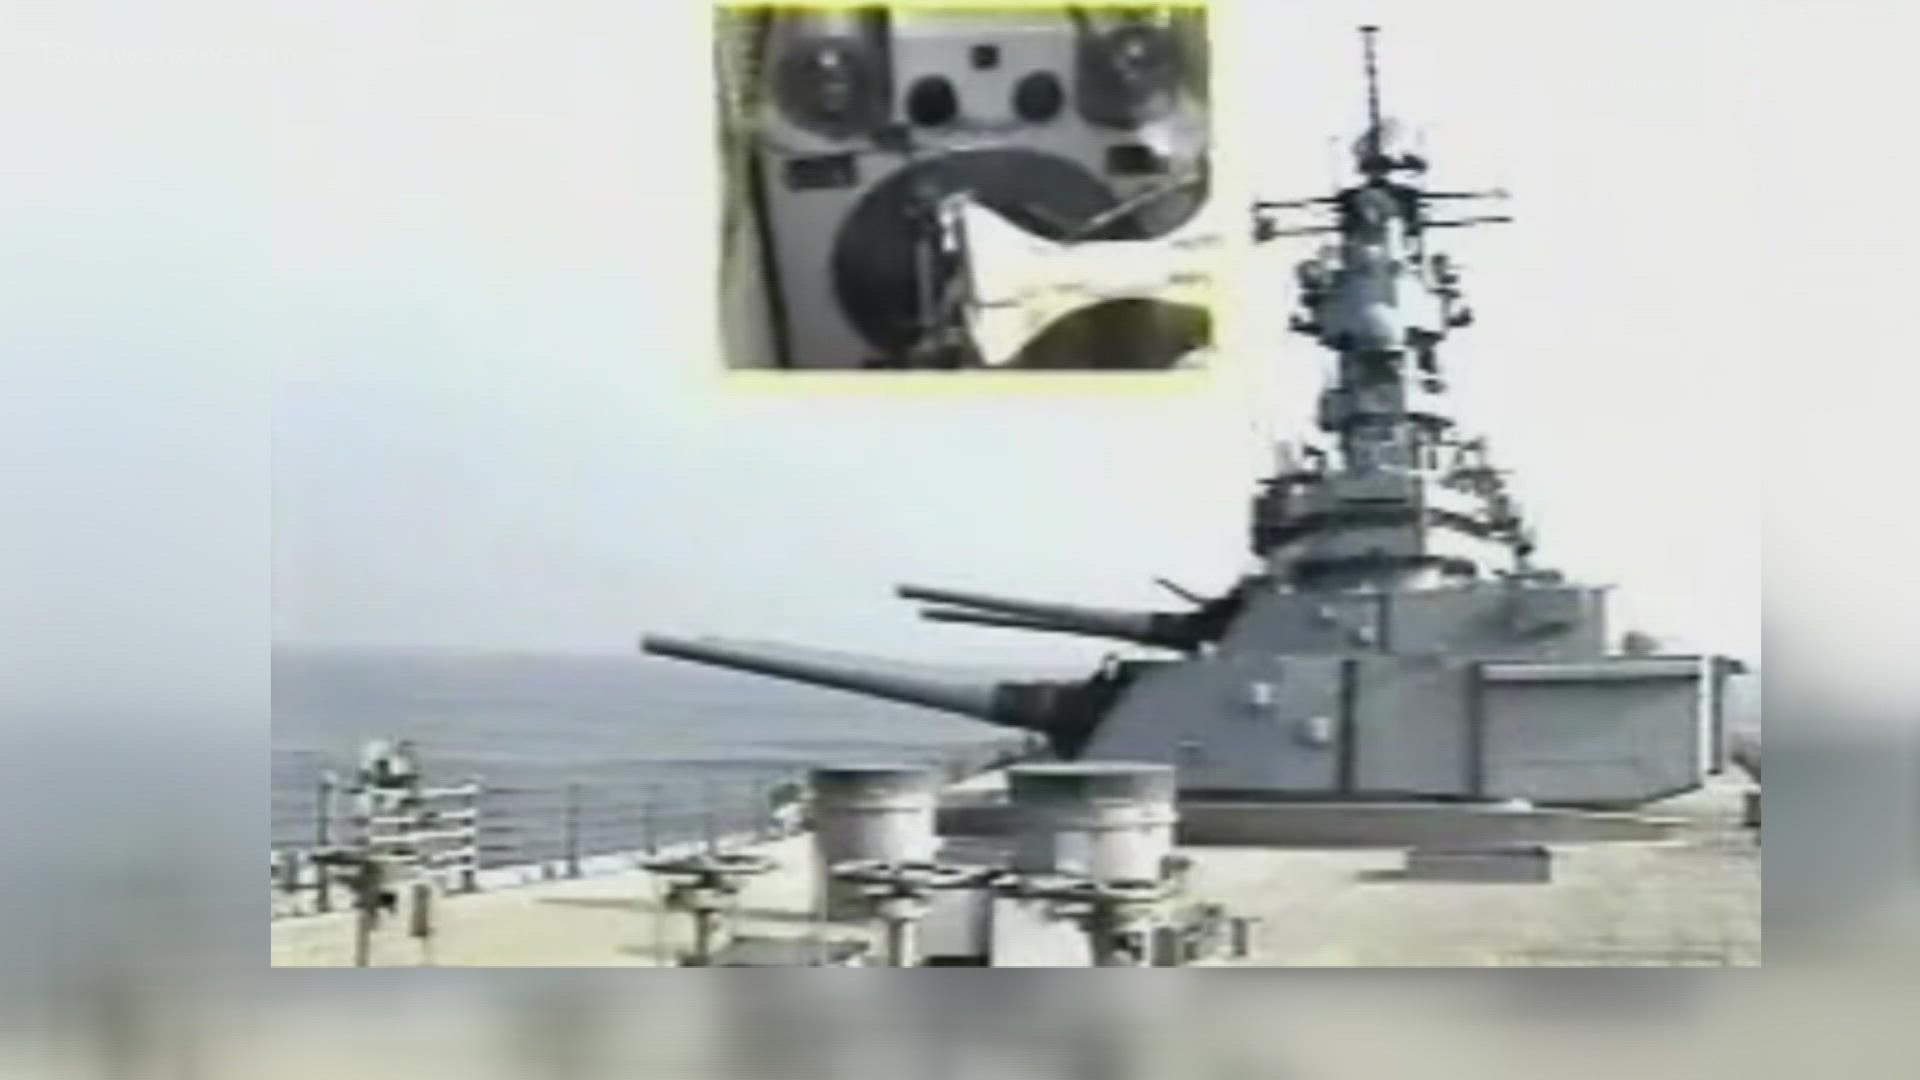 It's a dark day in U.S. Navy history. On April 19, 989, an explosion rocked the battleship USS Iowa.